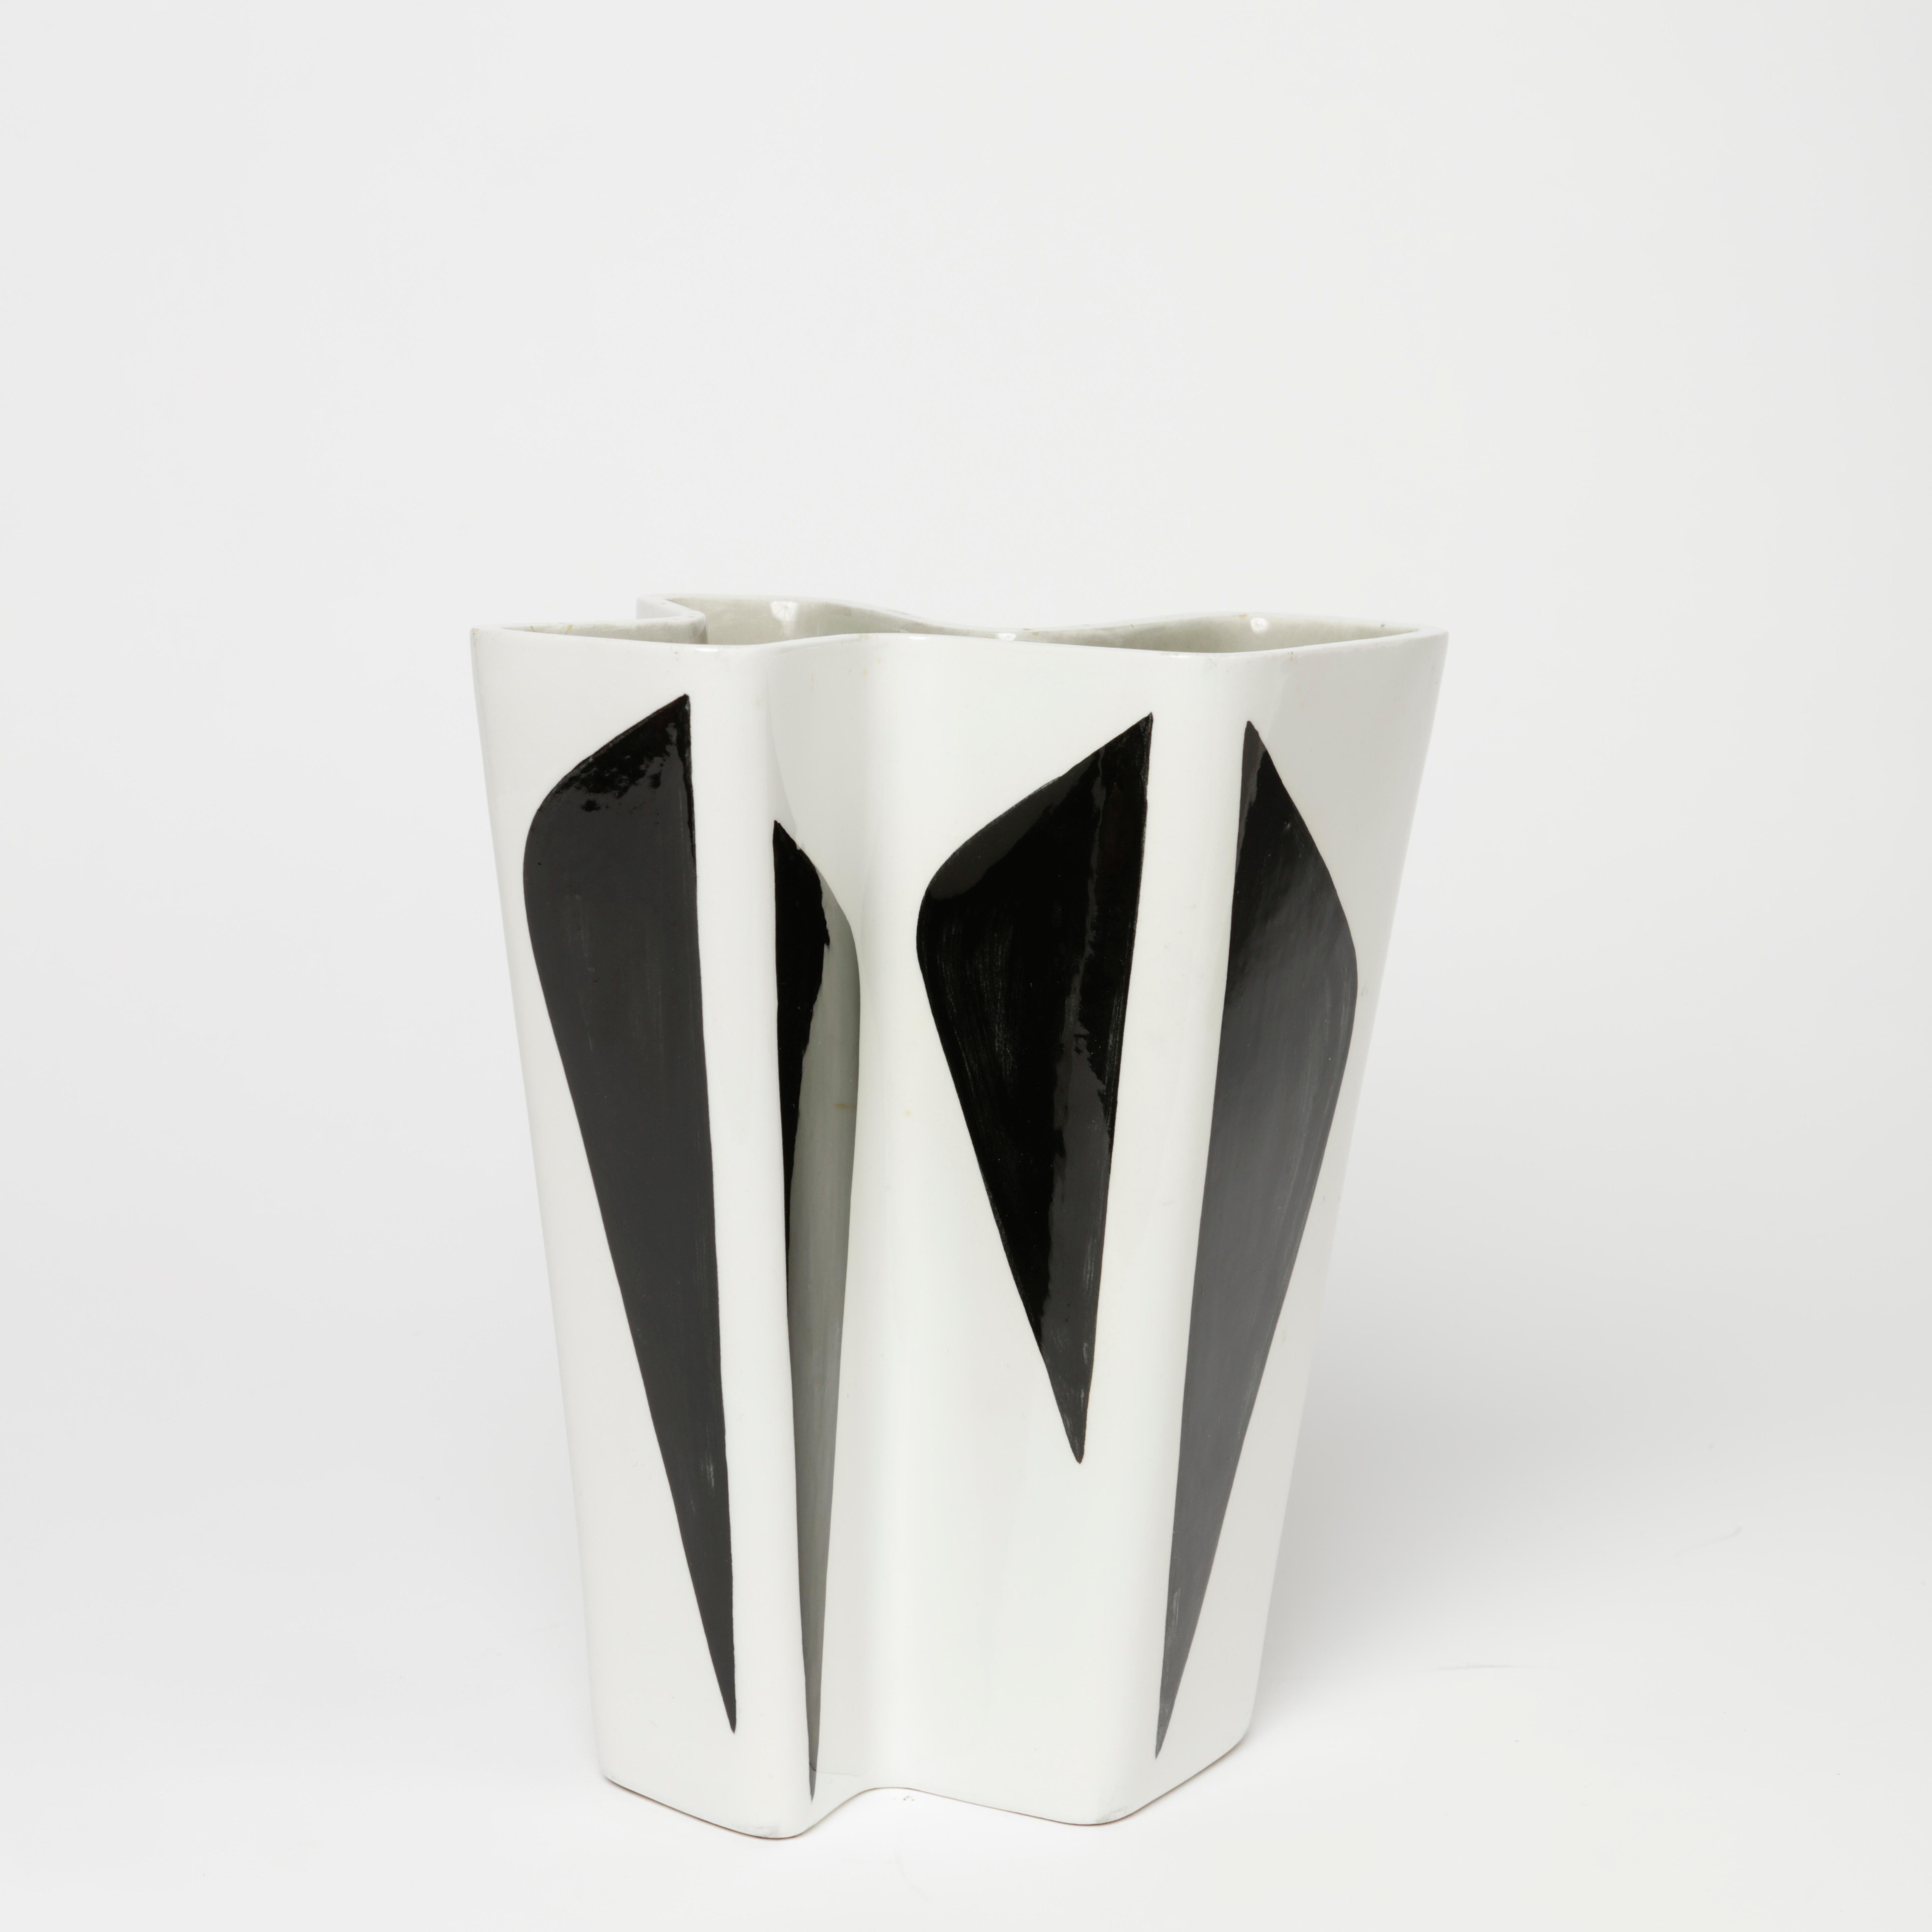 Konstrakta vase by Carl-Harry Stålhane for Rörstrand, 1953.
Measures: 20cm/7.9